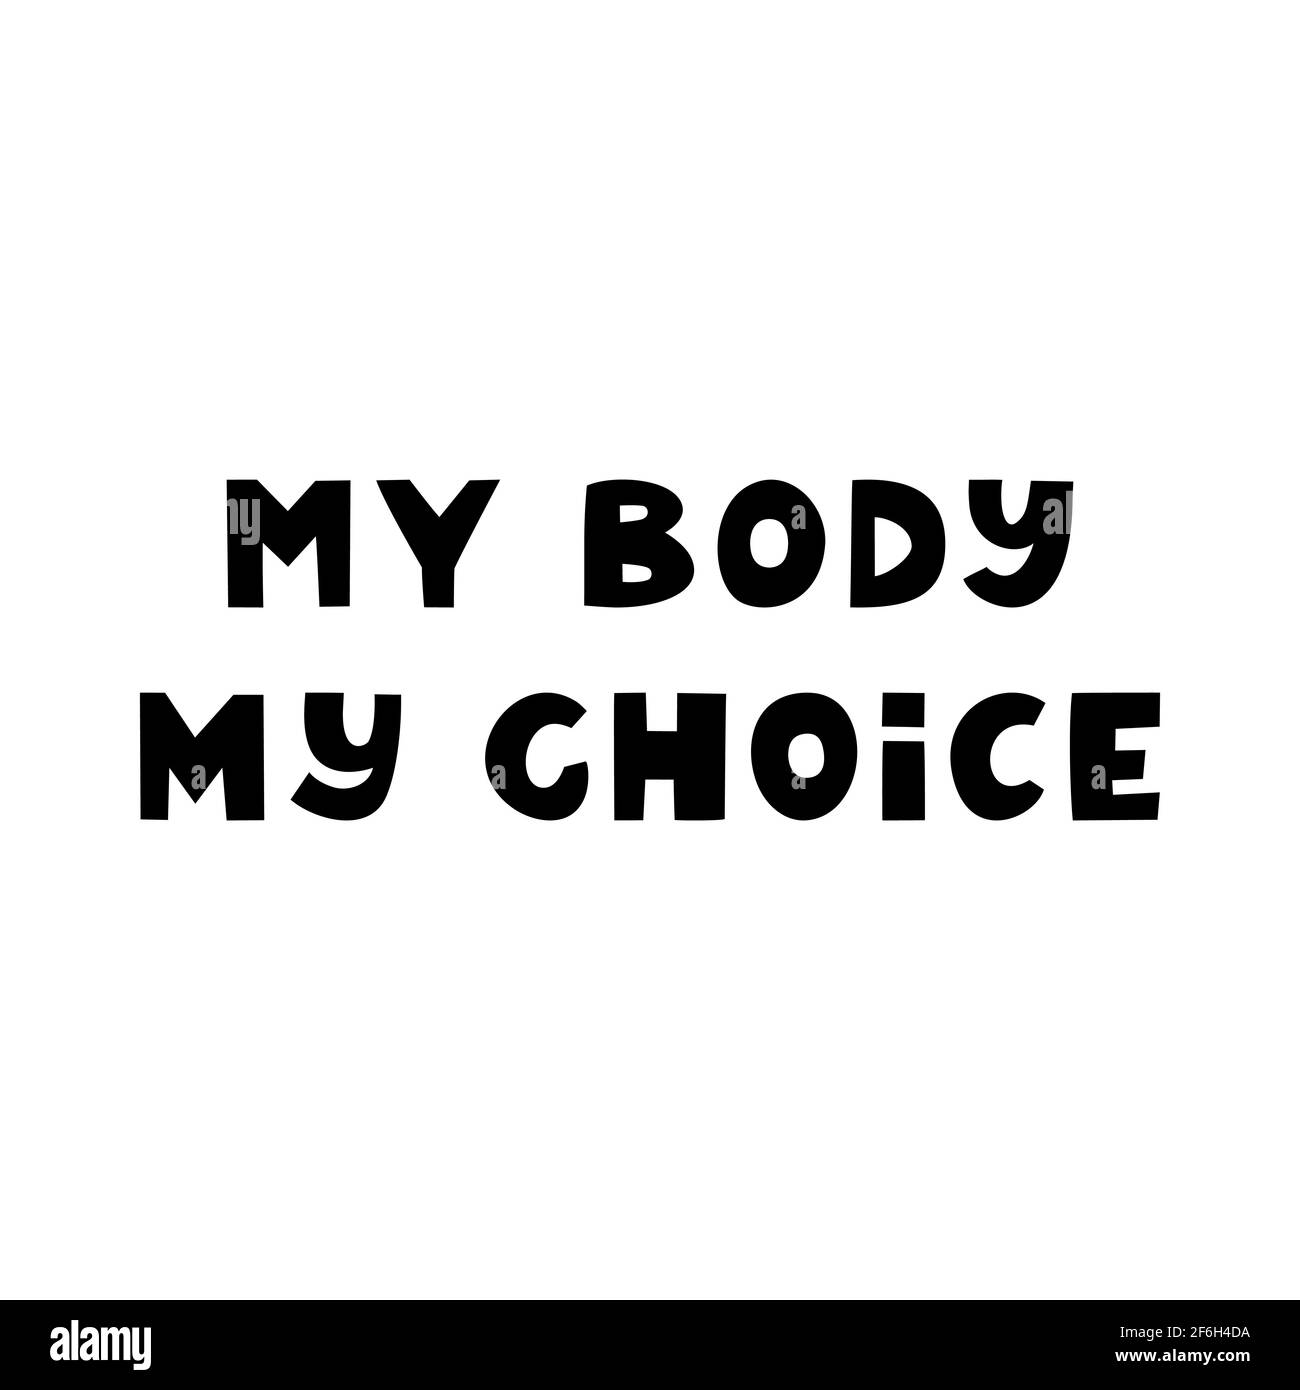 my body my choice by Kika Klat on Dribbble